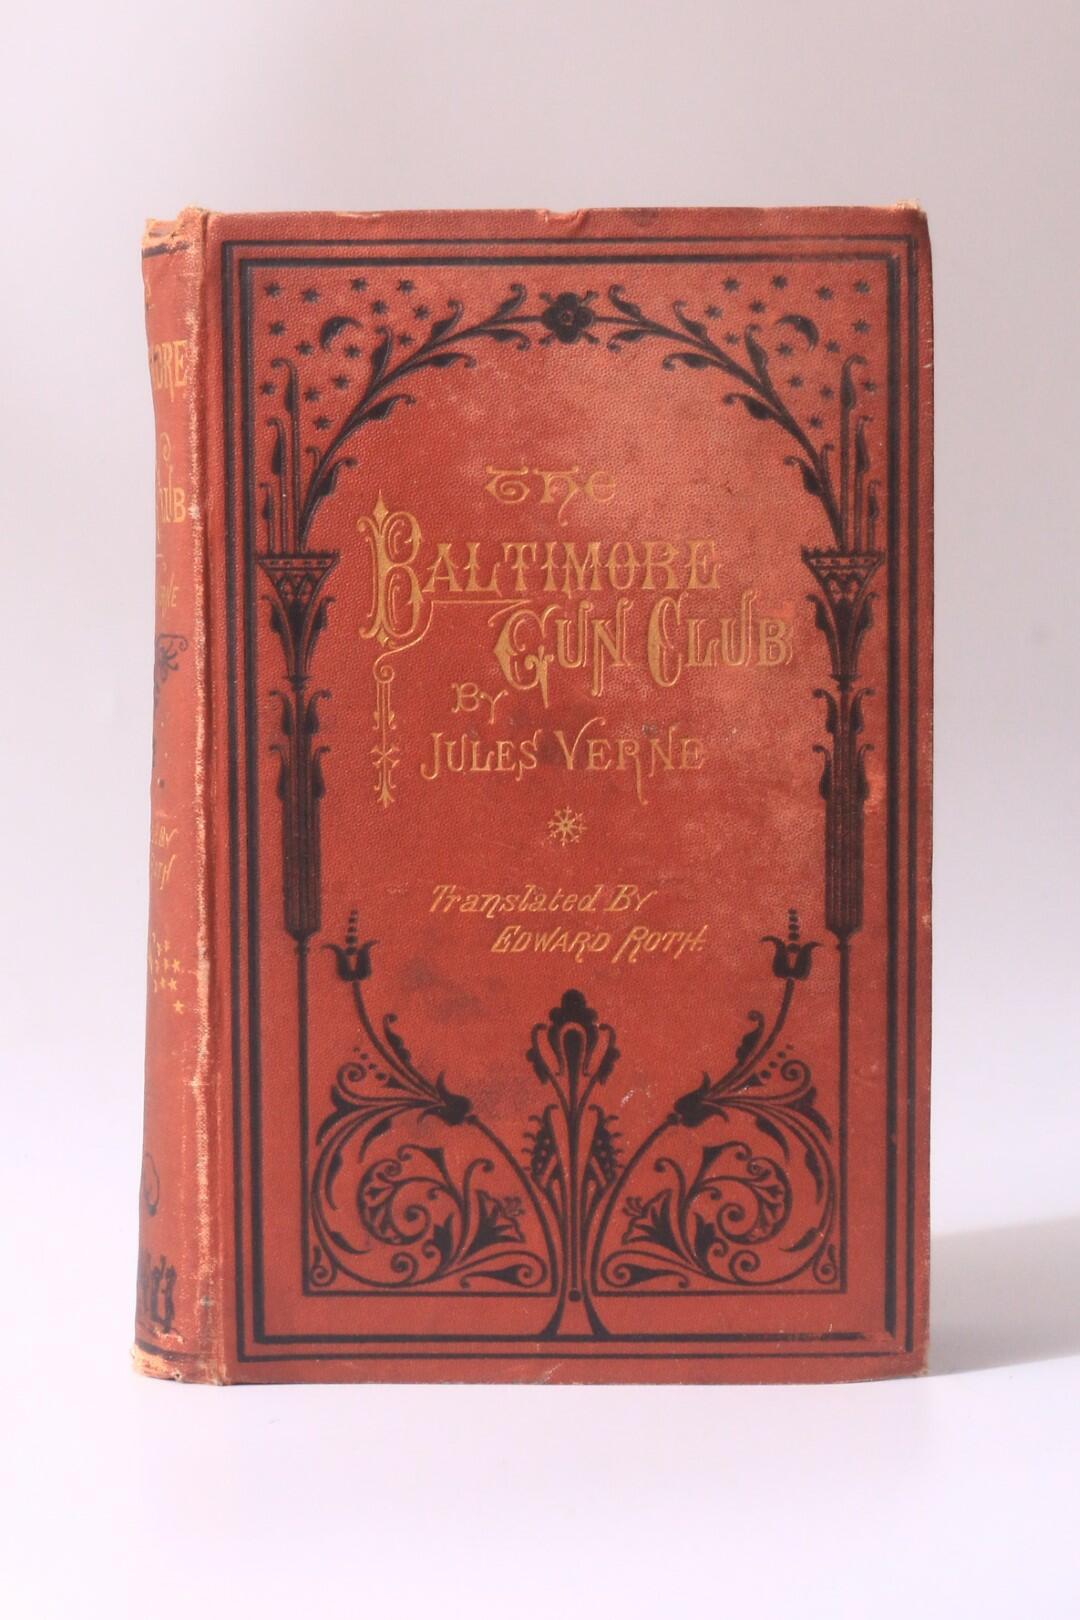 Jules Verne - The Baltimore Gun Club - King & Baird, 1874, Later Edition.